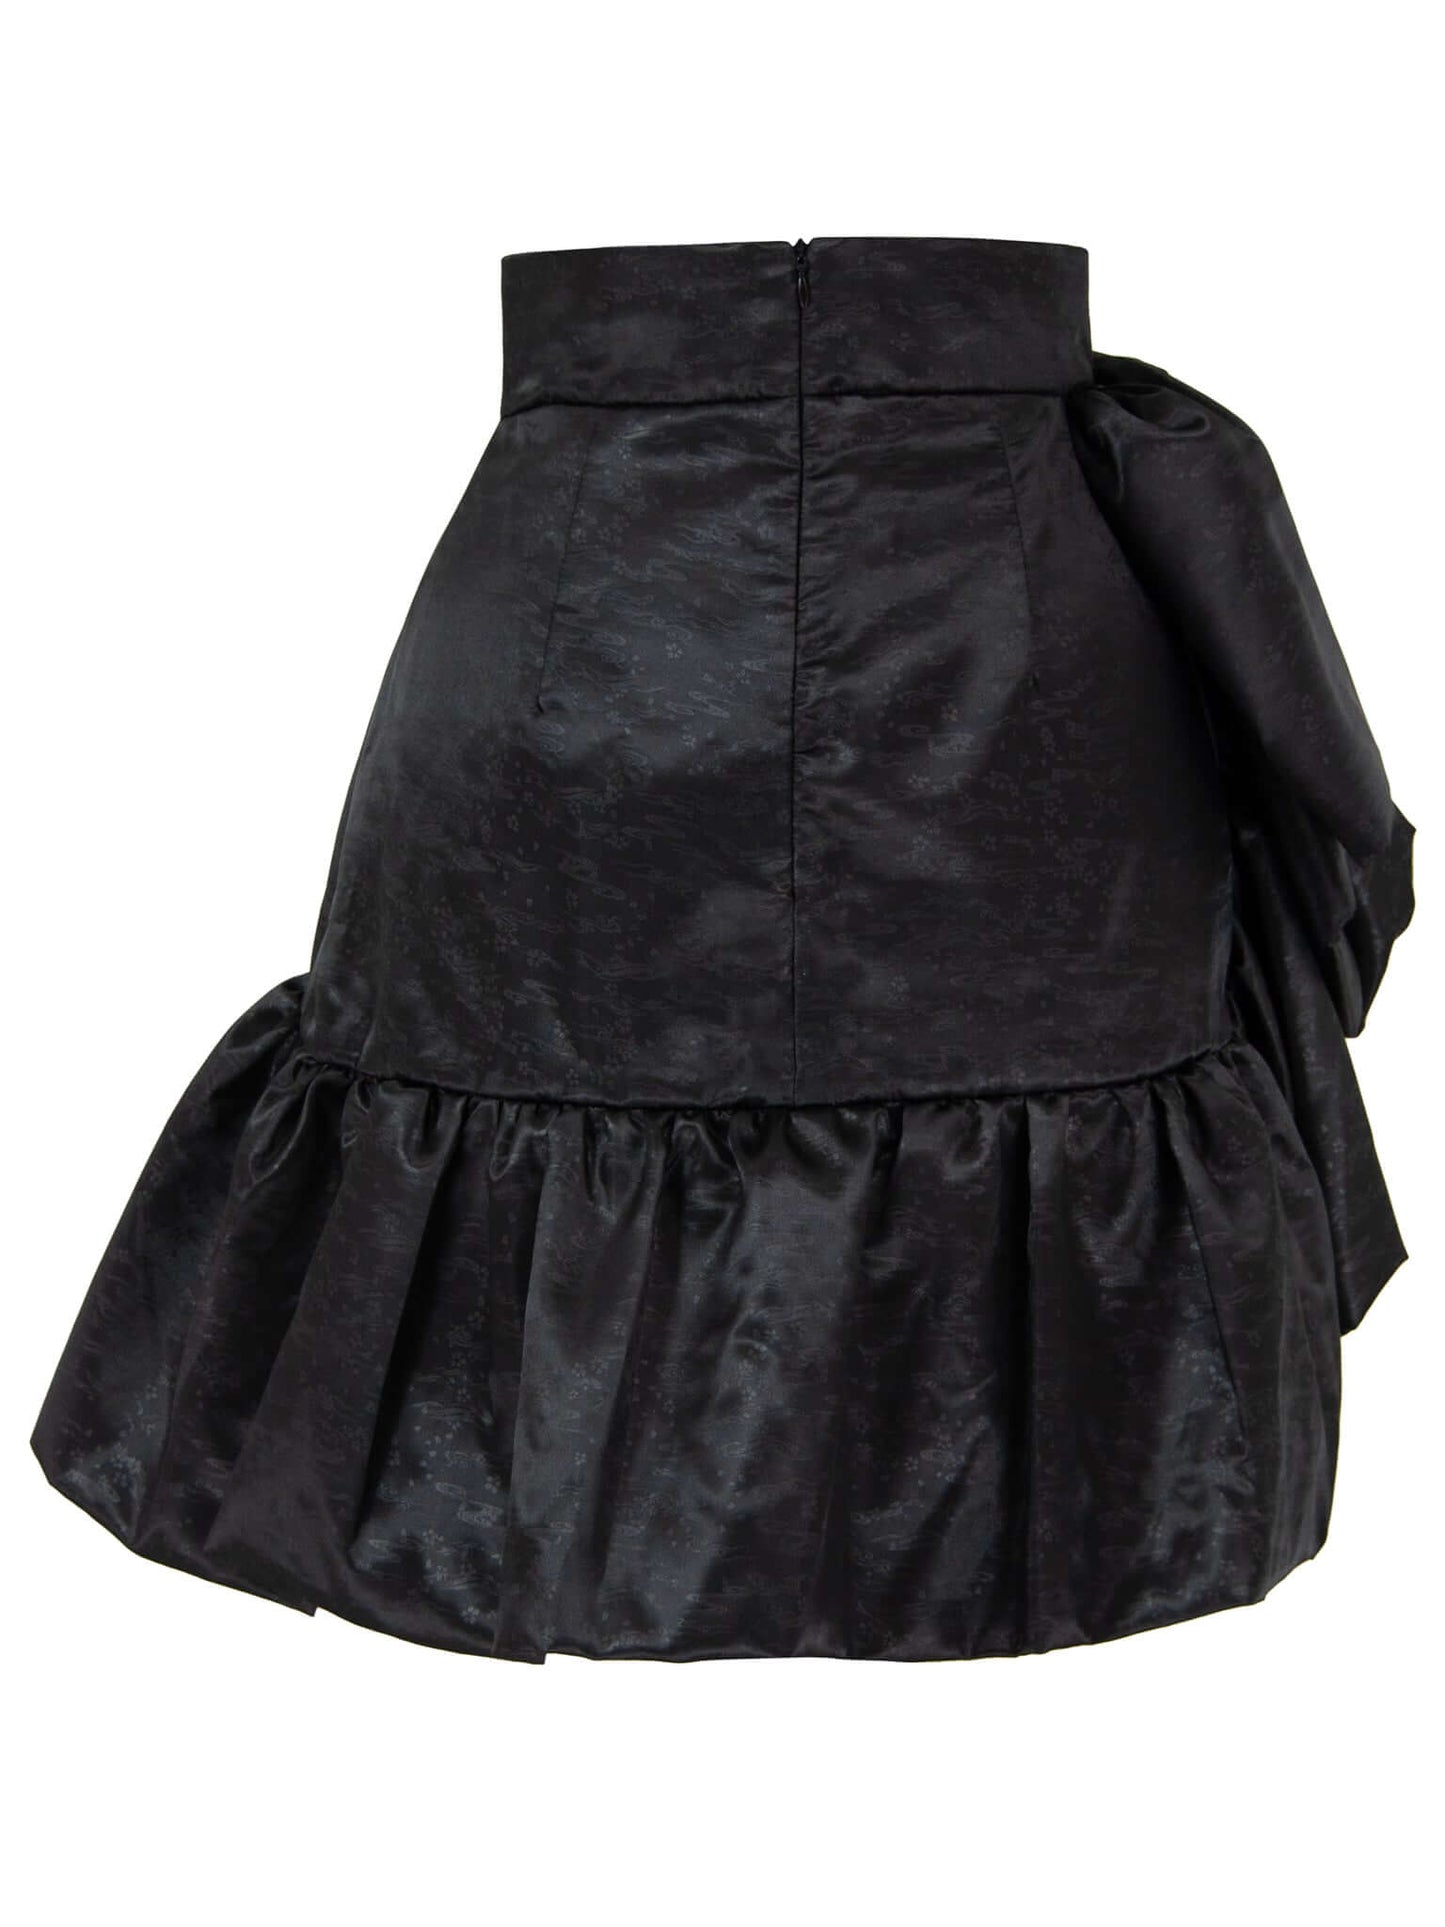 Hopeless Romantic Assymentric Ruffled Mini Skirt Tia Dorraine